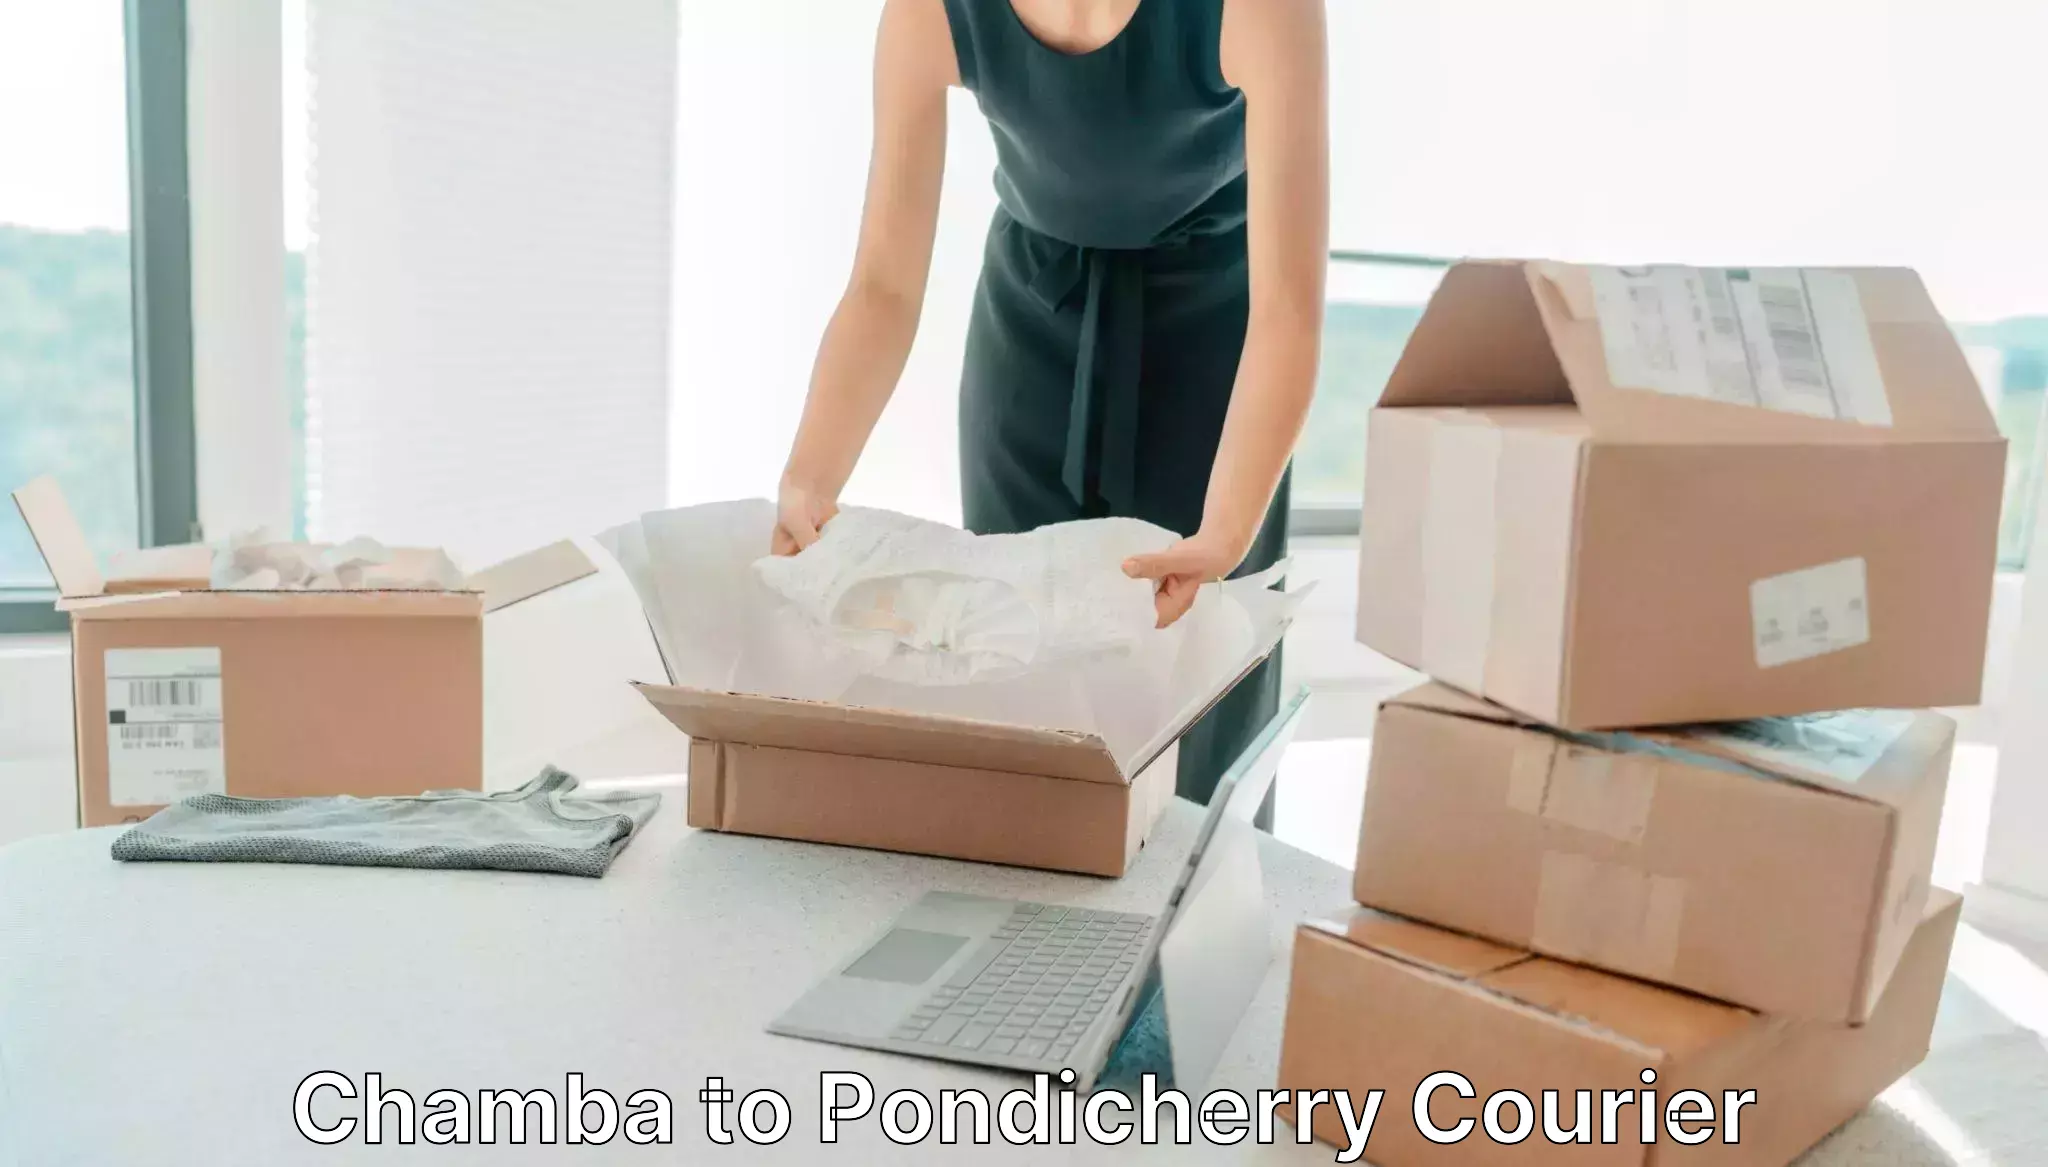 Logistics service provider Chamba to Pondicherry